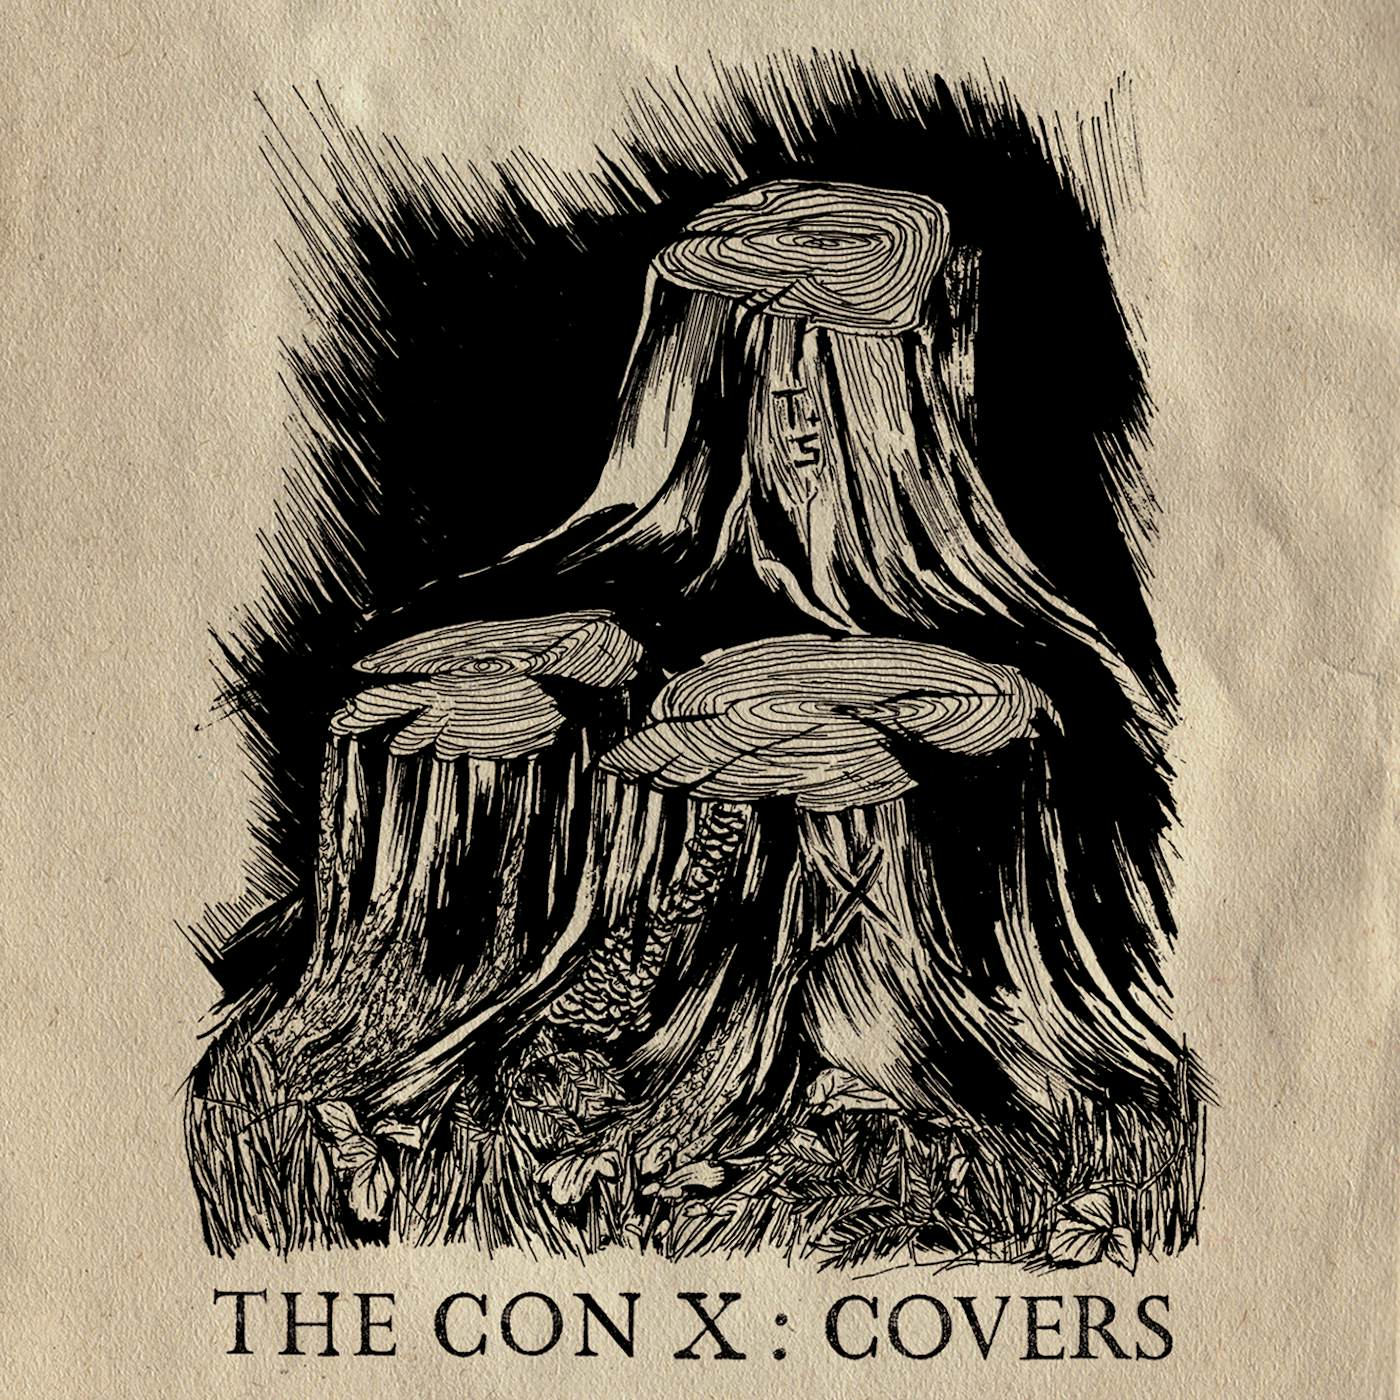 Tegan and Sara CON X: COVERS Vinyl Record